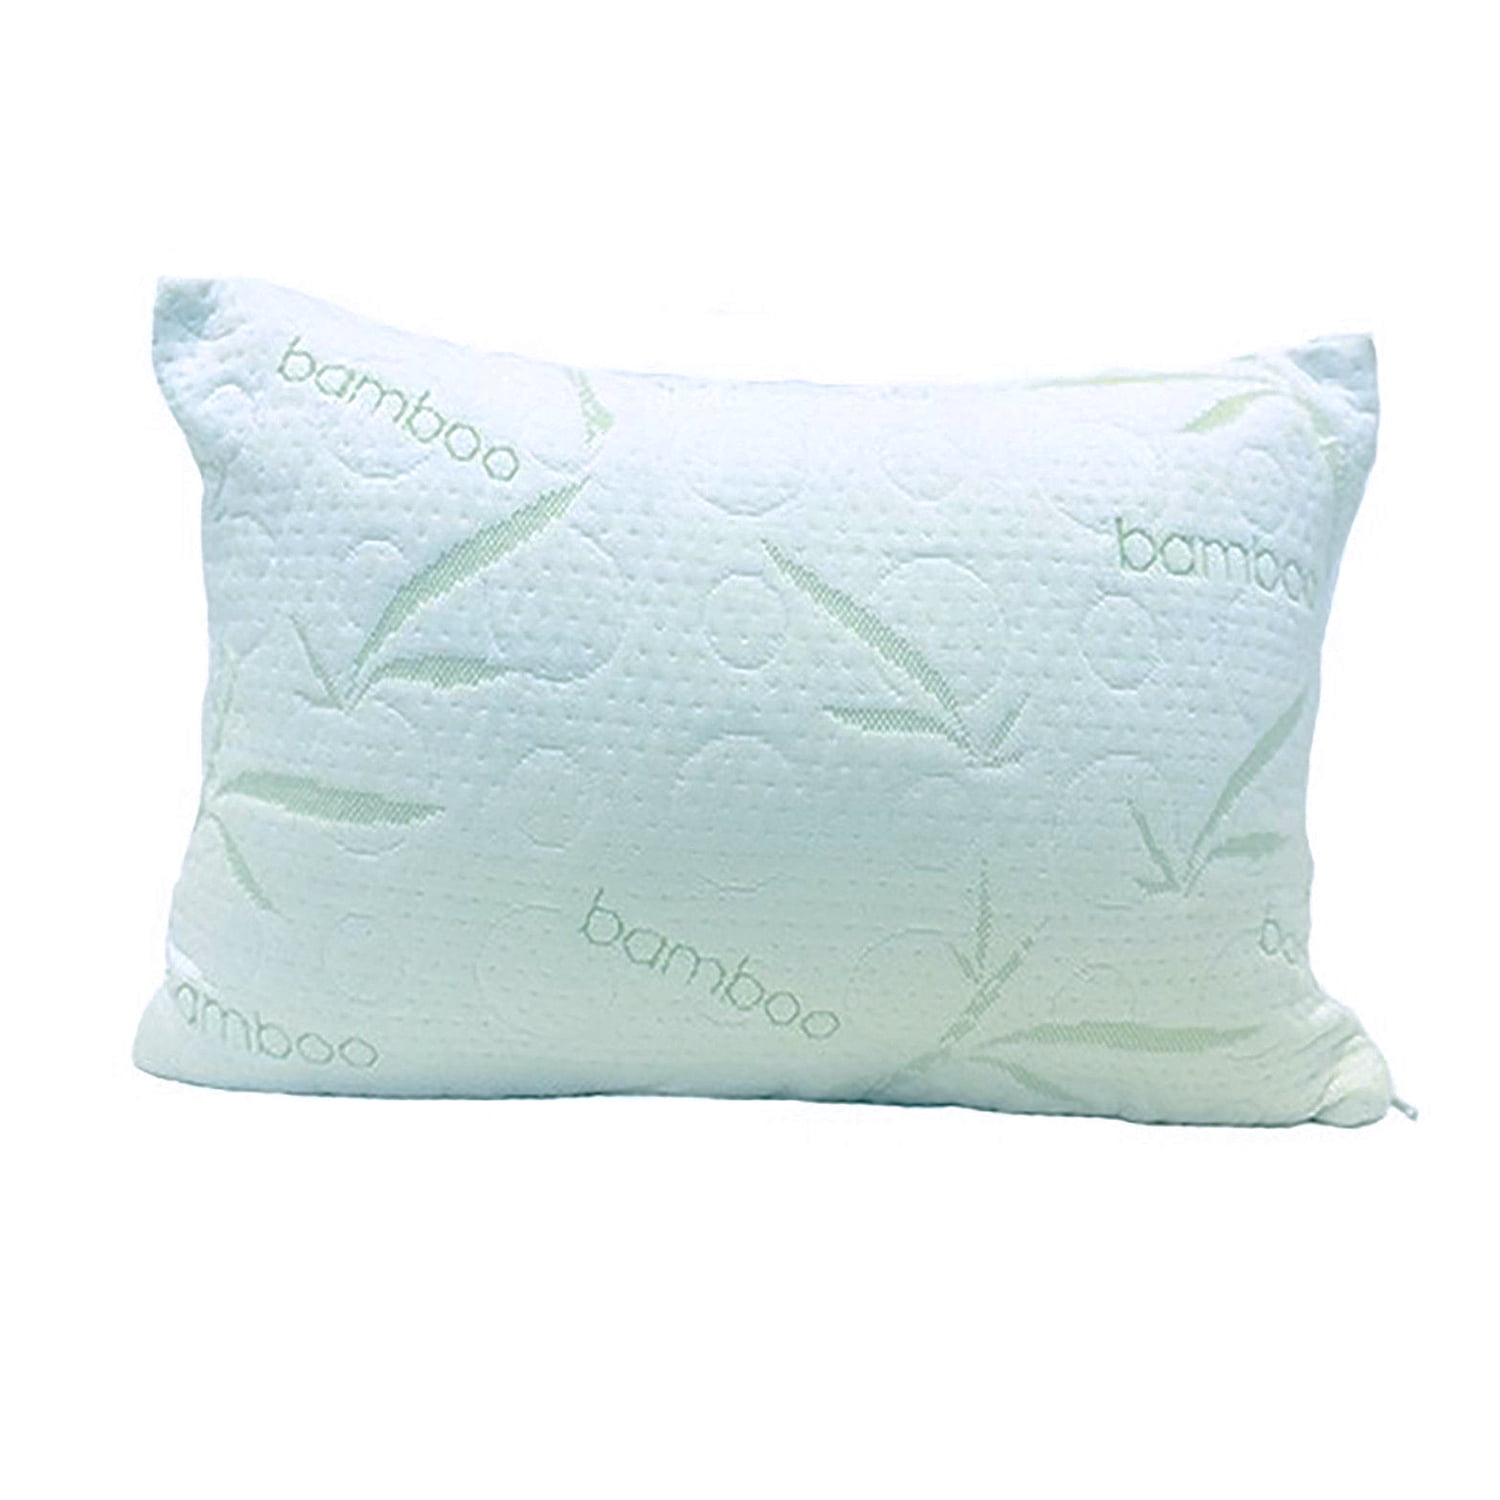 Bamboo Shredded Memory Foam Pillow,Made In USA,Queen,King,Standard,Travel 